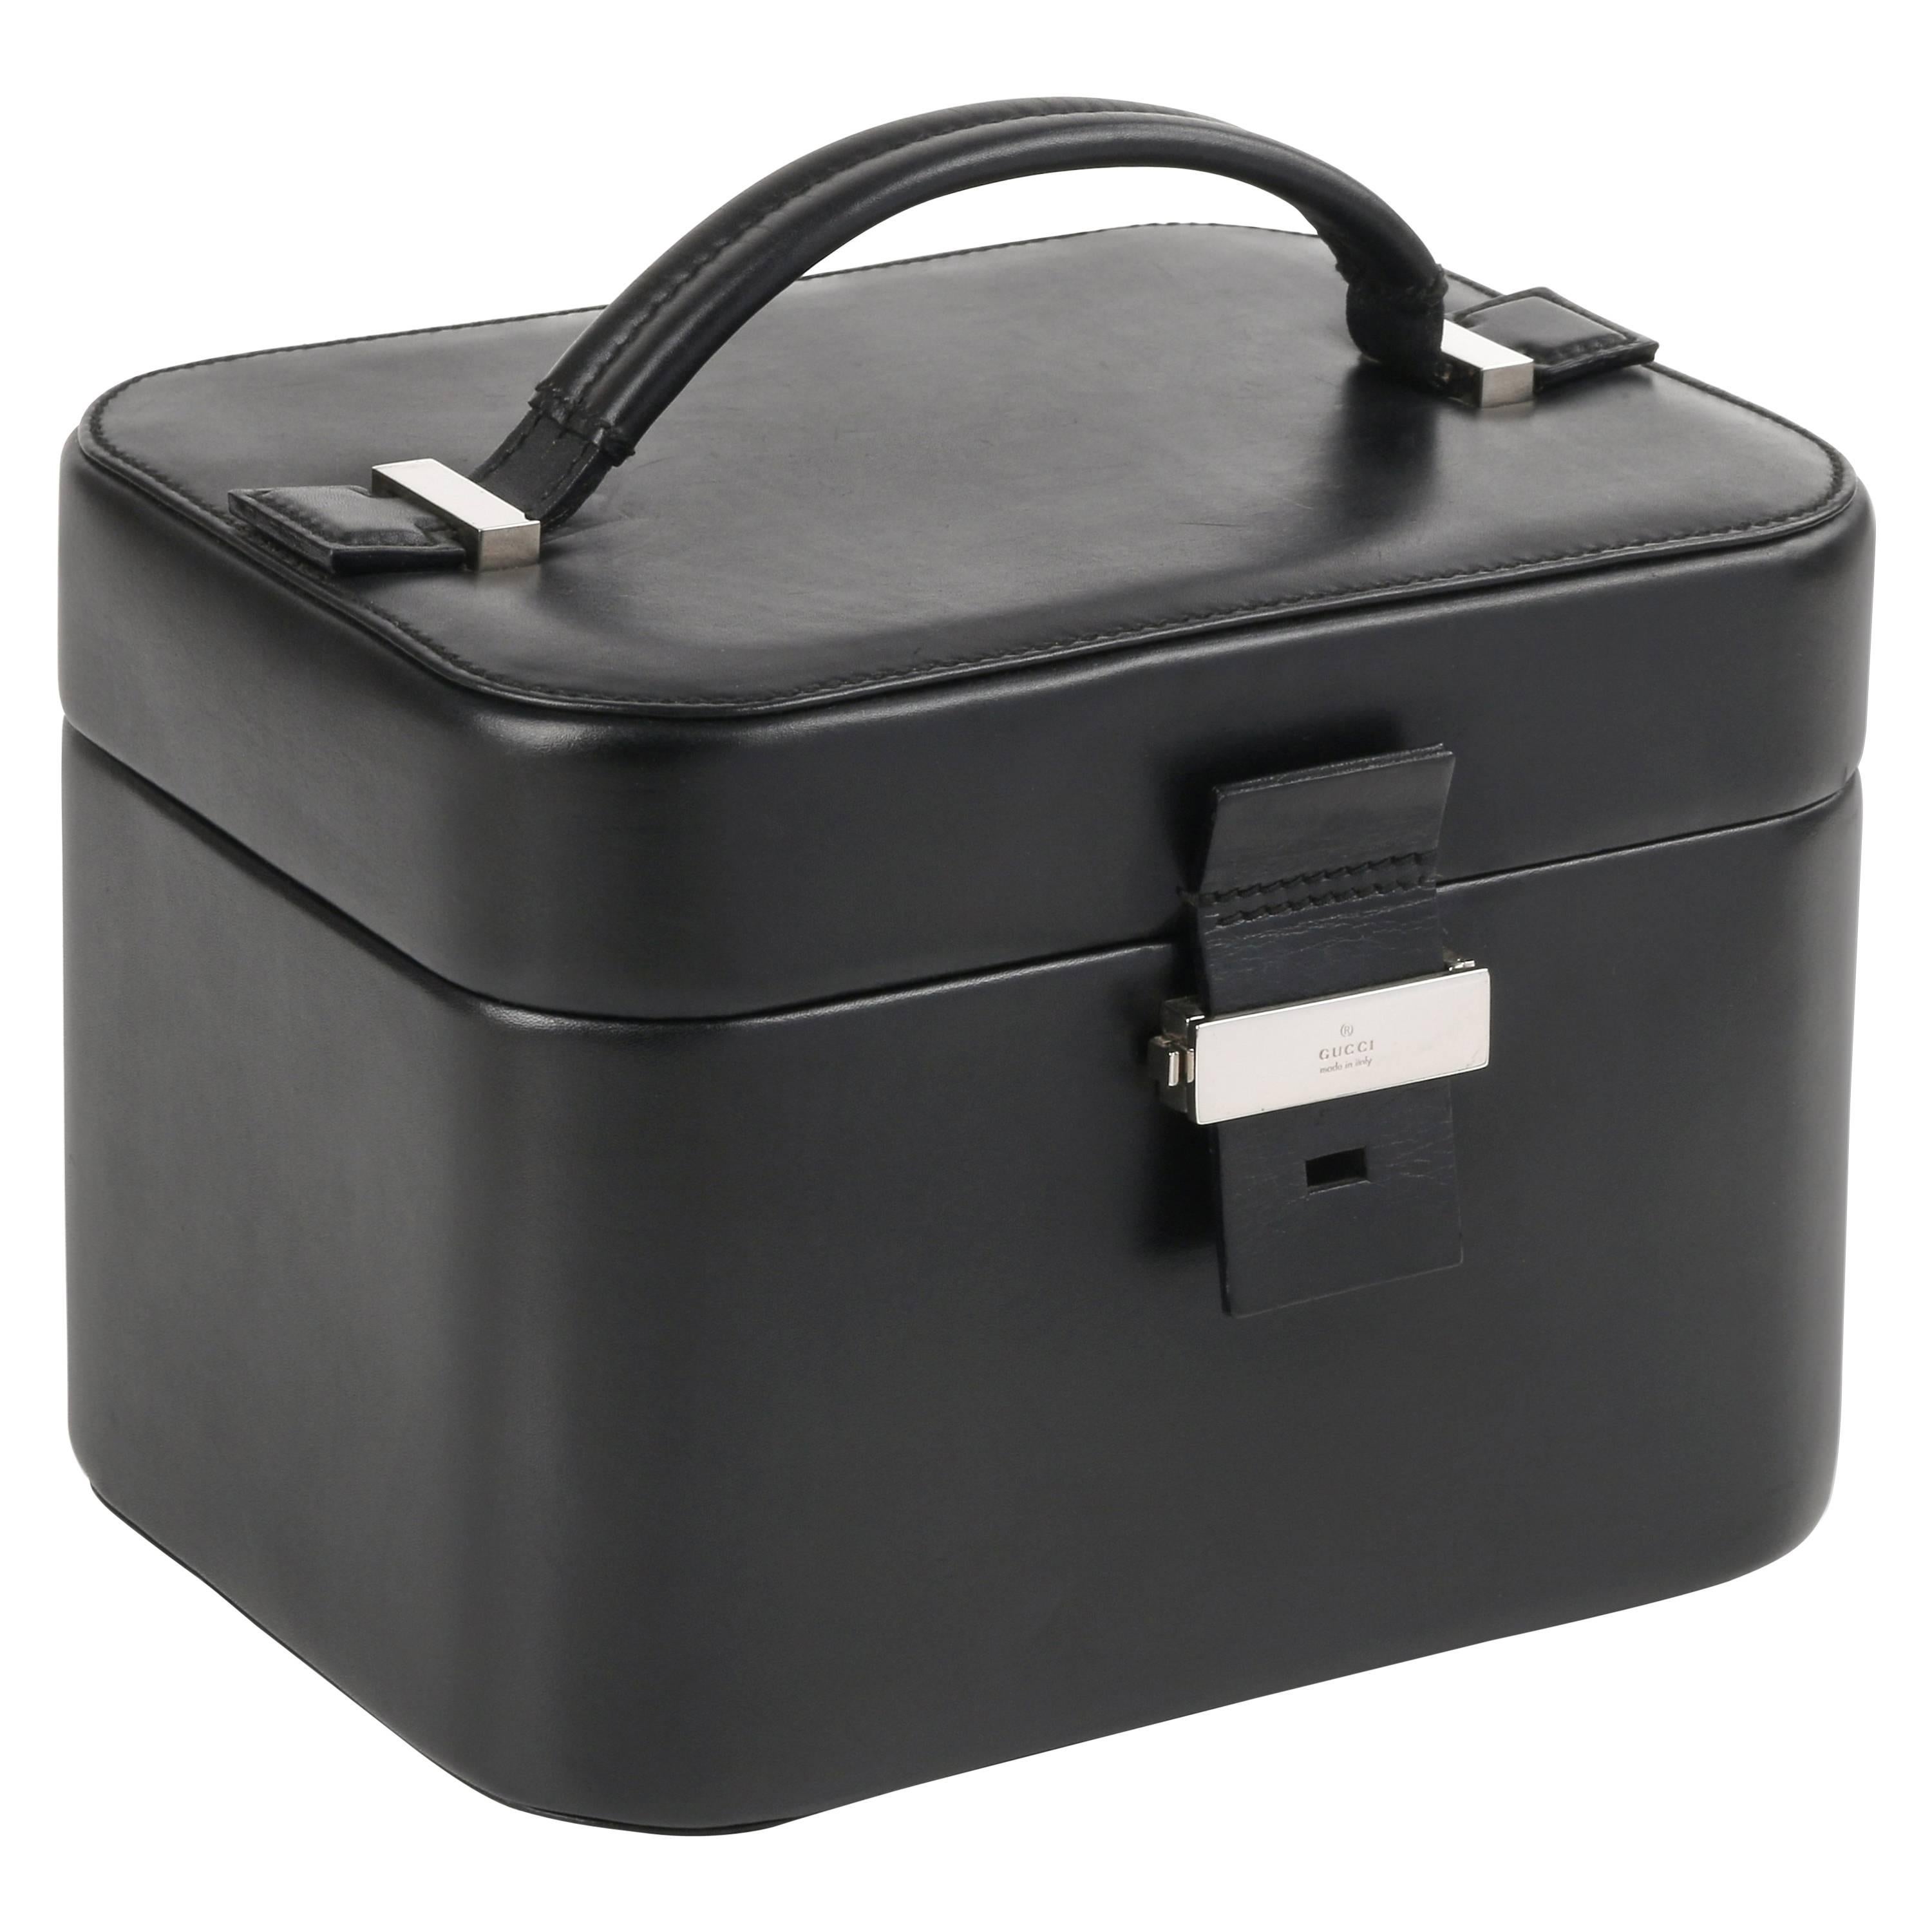 GUCCI Black Genuine Leather Structured Train Case Cosmetic Travel Bag Box Purse